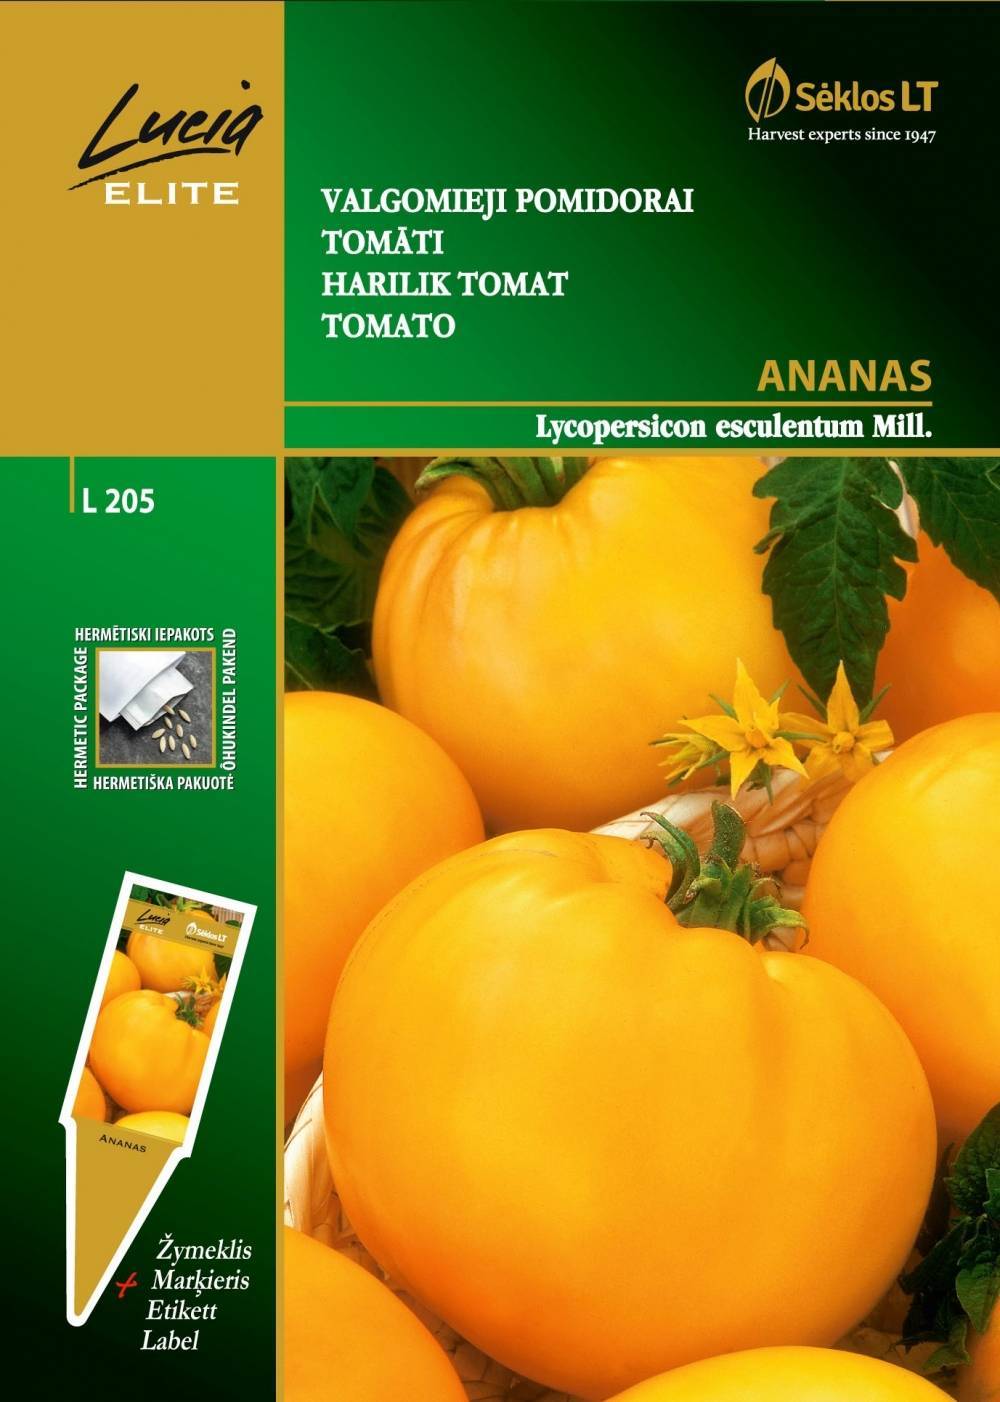 Томат гавайский ананас: характеристика и описание крупноплодного сорта с фото